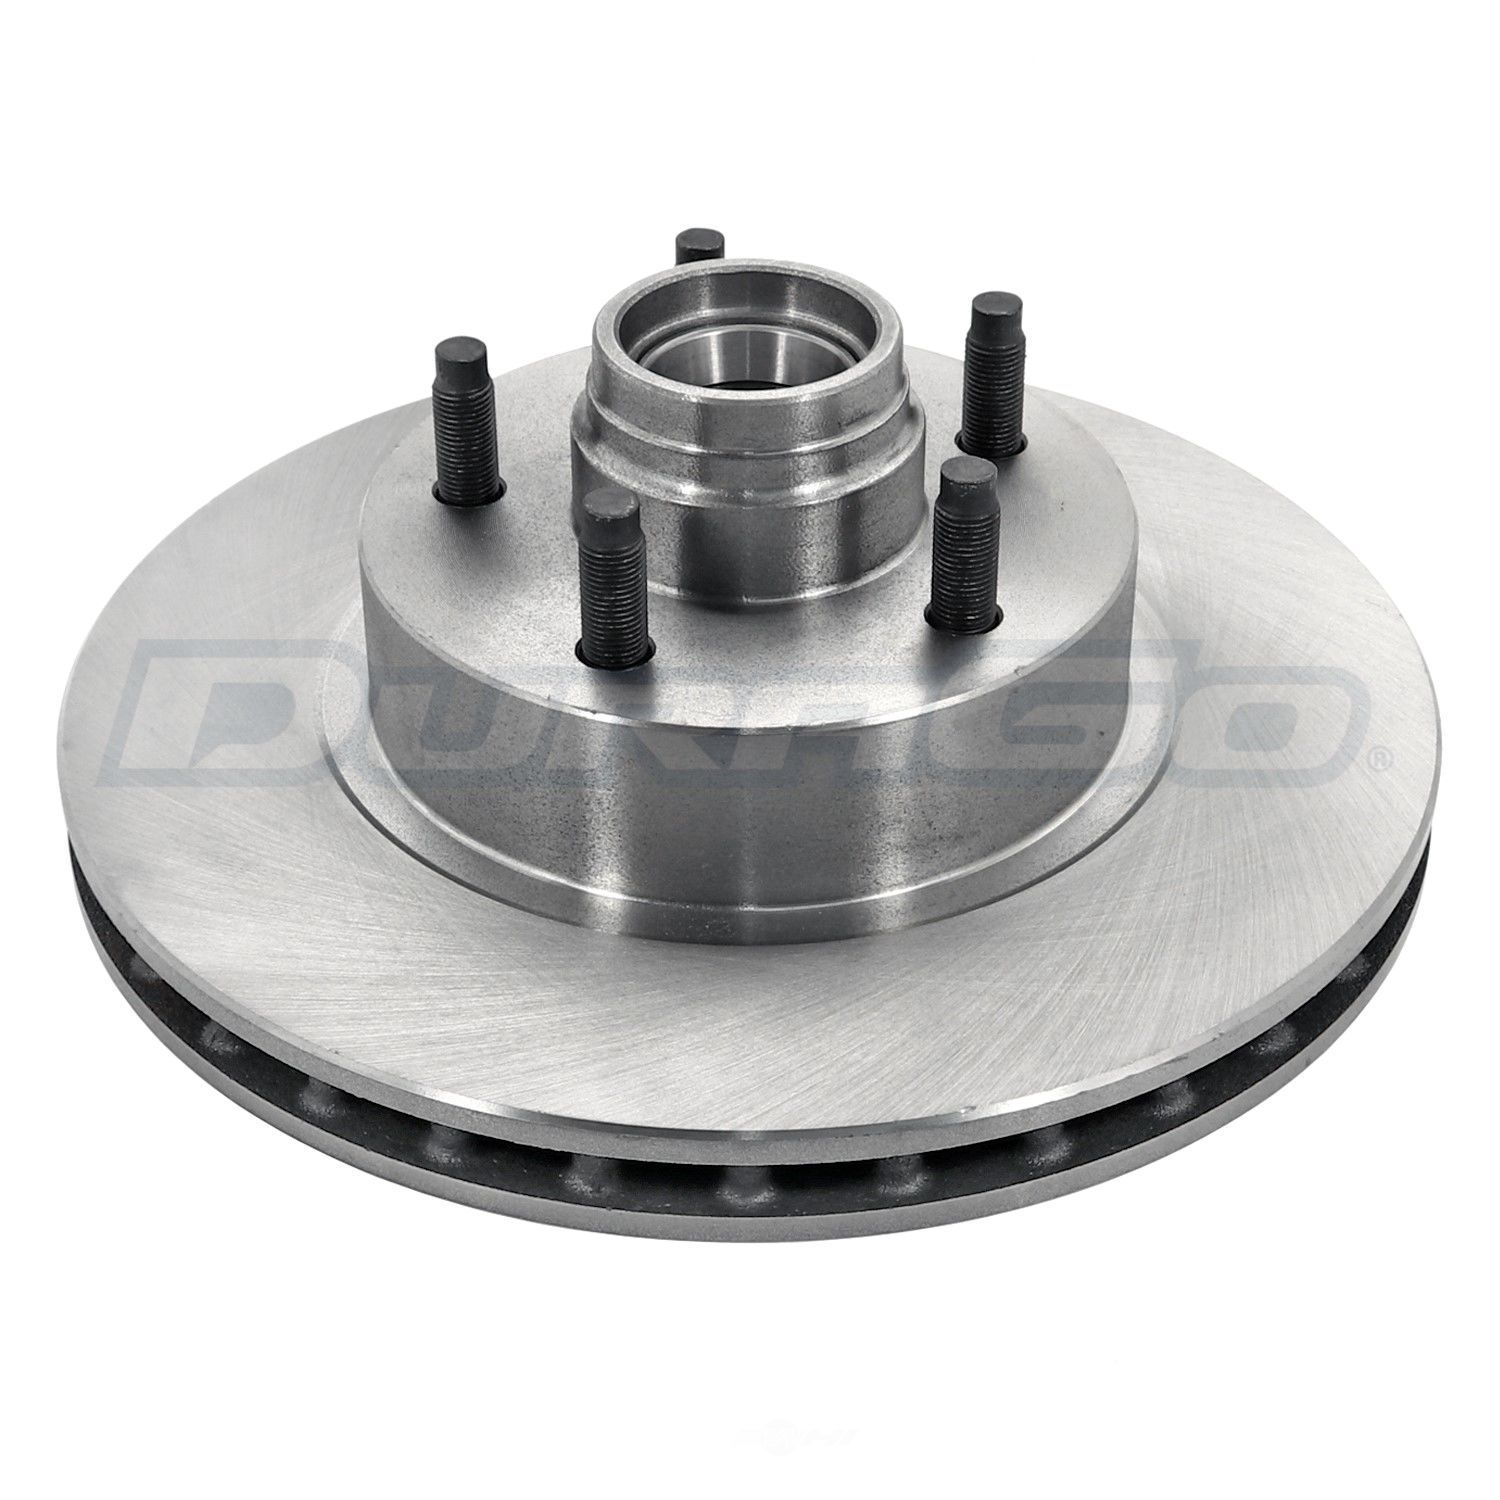 DURAGO - Disc Brake Rotor & Hub Assembly - D48 BR54104